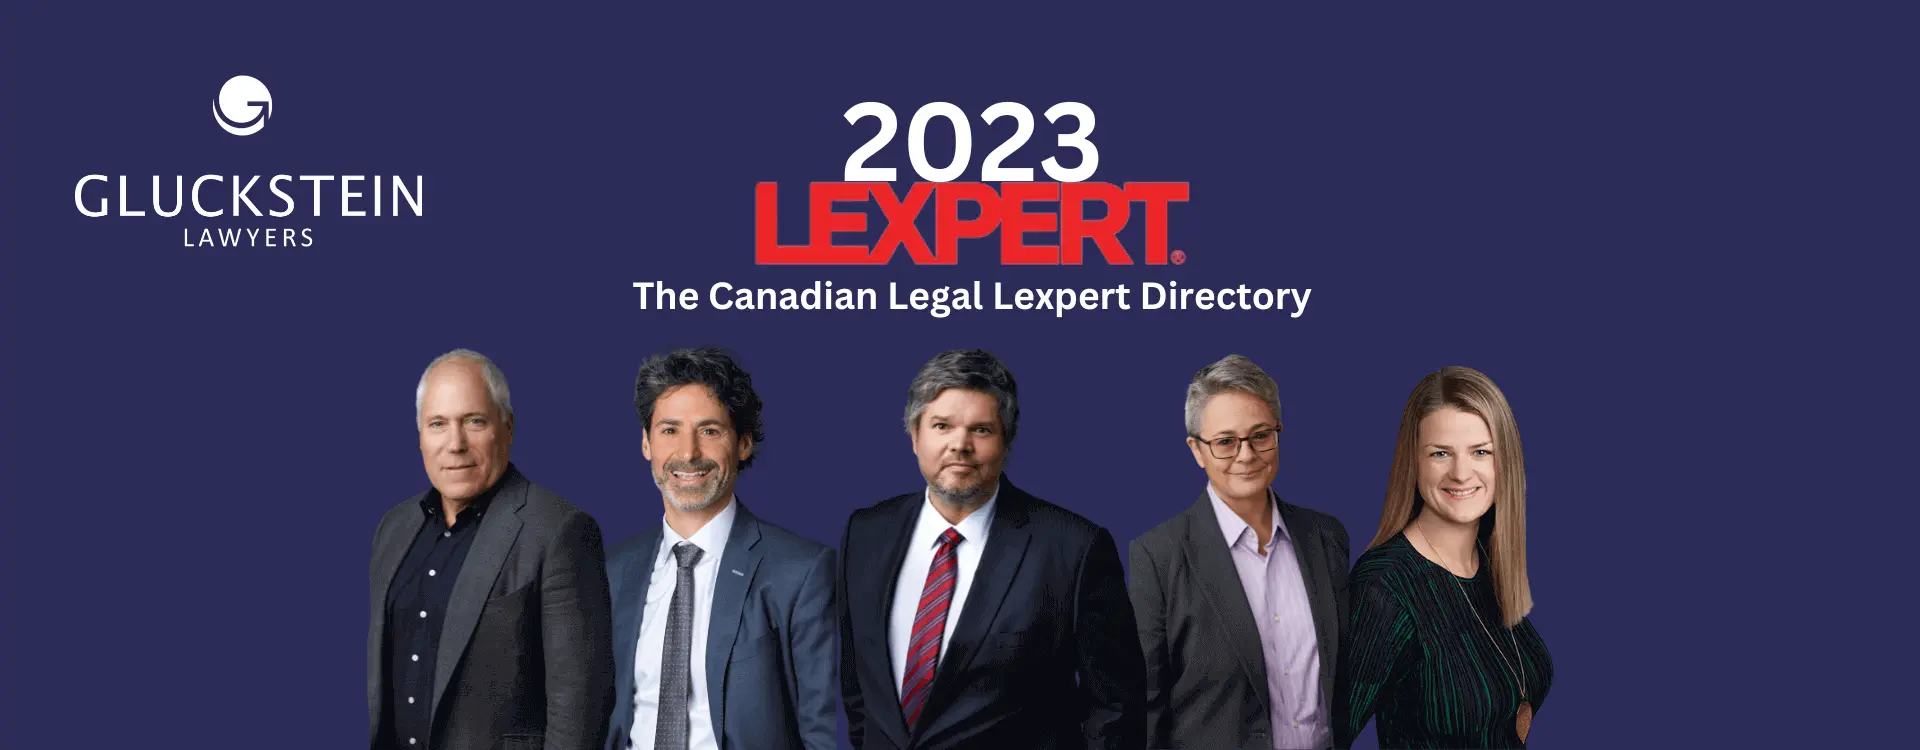 2023 Lexpert. The Canadian Legal Lexpert Directory. Richard Halpern, Charles Gluckstein, Steve Rastin, Simona Jellinek, Jan Marin photographed below the text. Gluckstein Lawyers logo is in the top left hand corner.